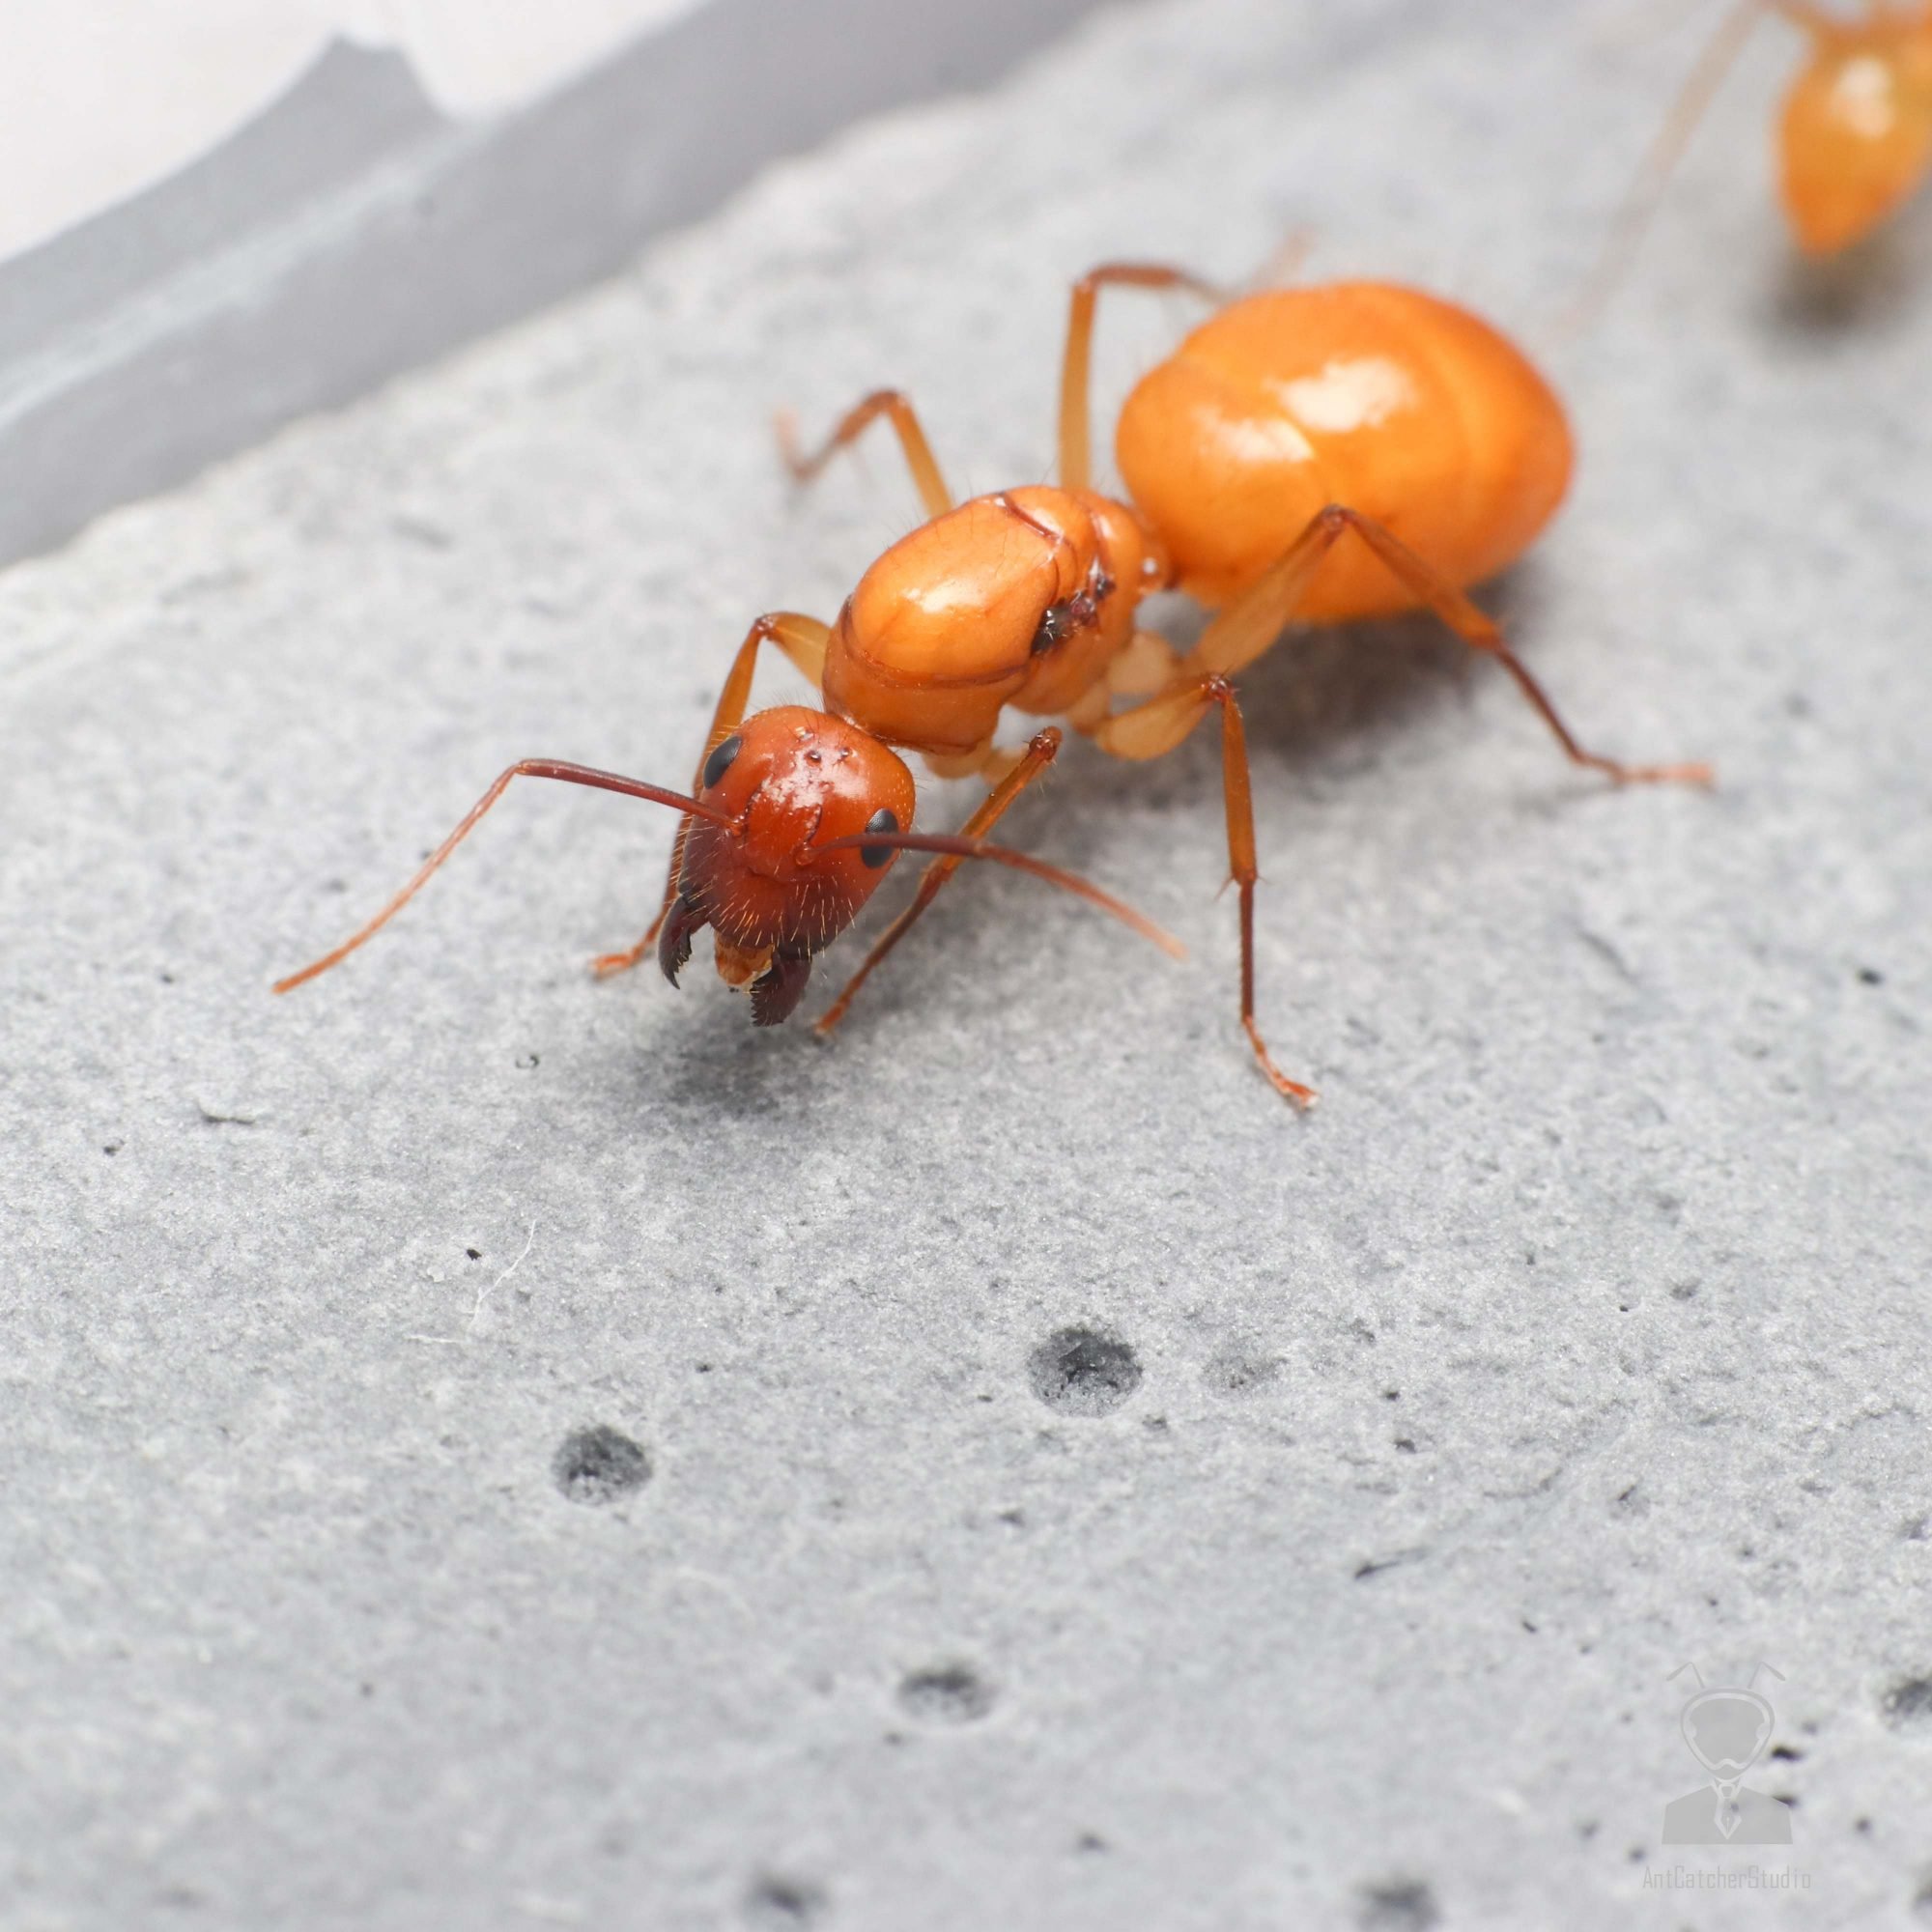 甜蜜巨山蟻  Camponotus variegatus dulcis 蟻后